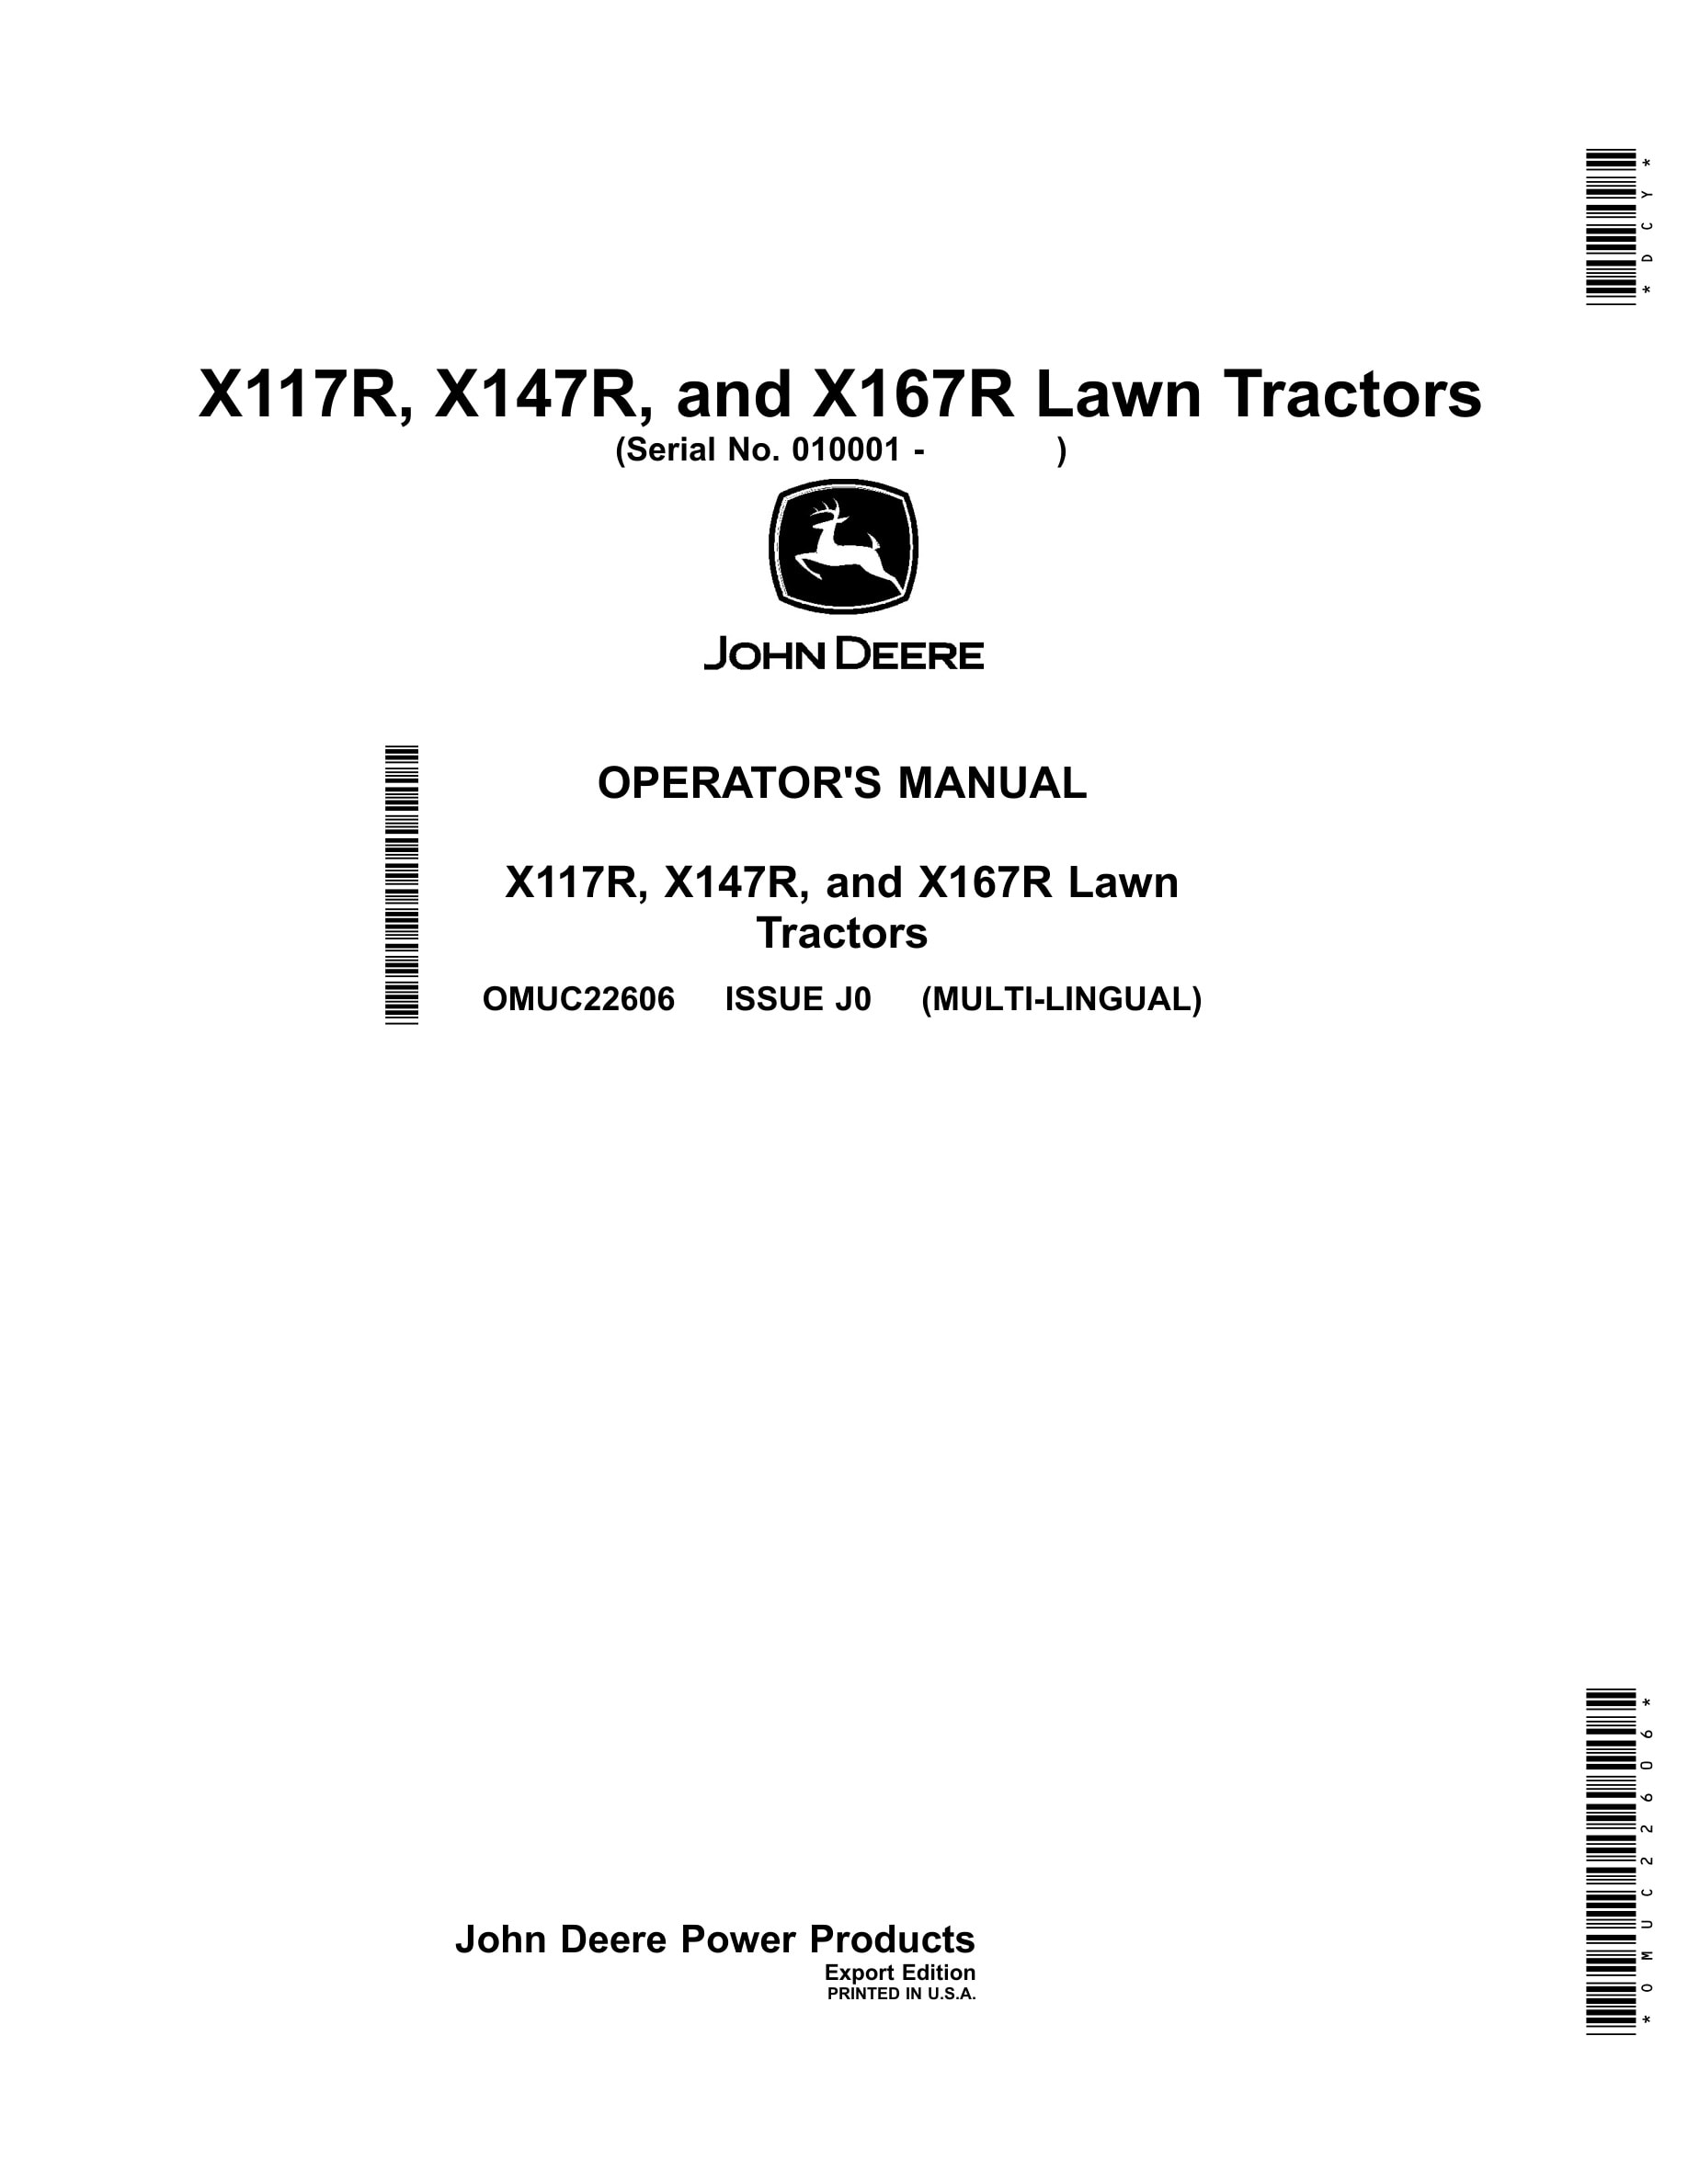 John Deere X117r, X147r, And X167r Lawn Tractors Operator Manuals OMUC22606-1